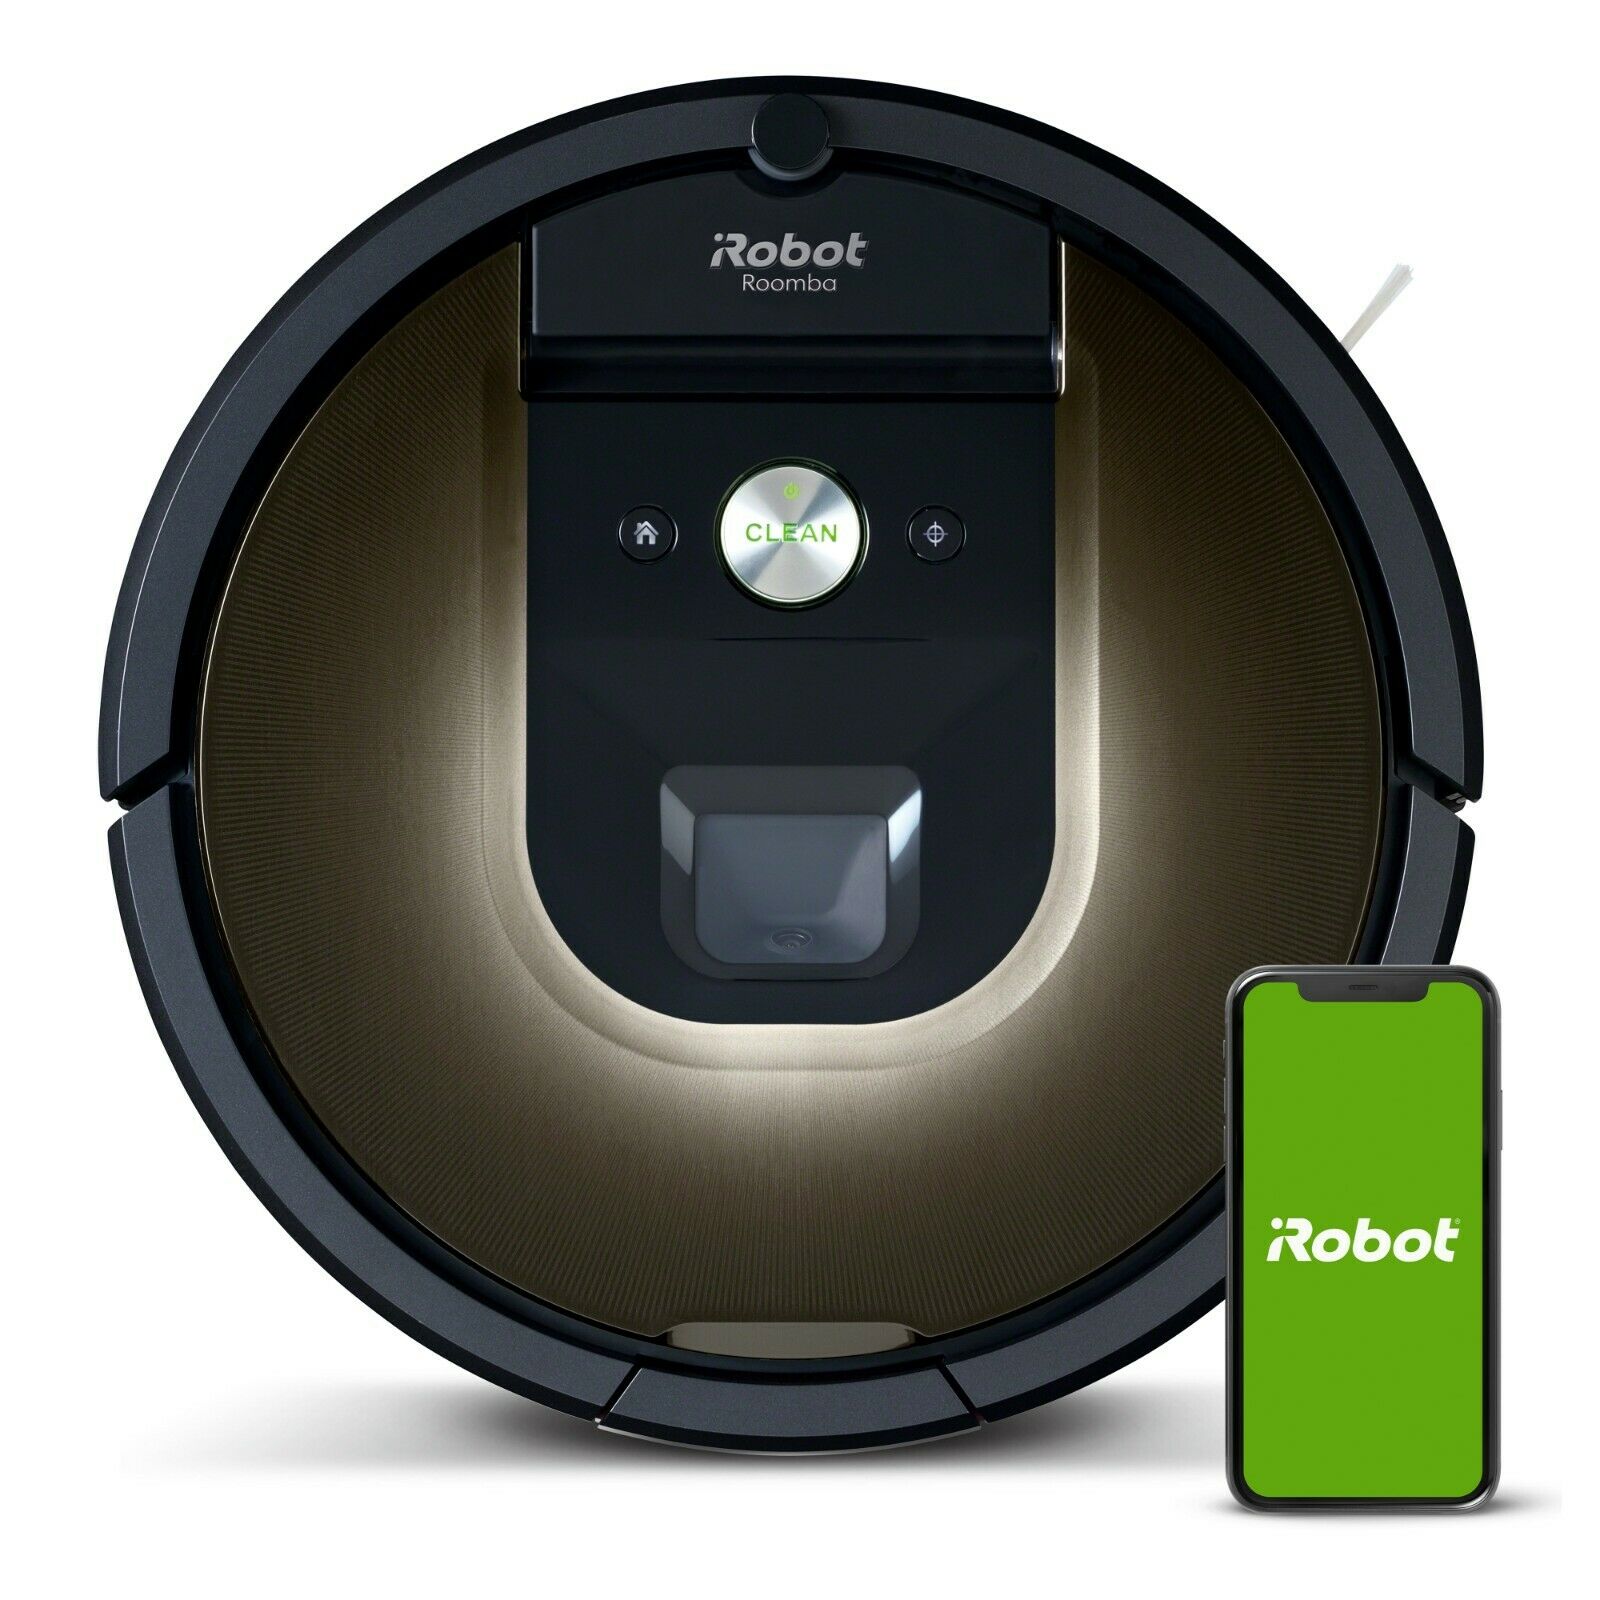 iRobot Roomba 980 Vacuum Cleaning Robot $300 Shipped - DealVega